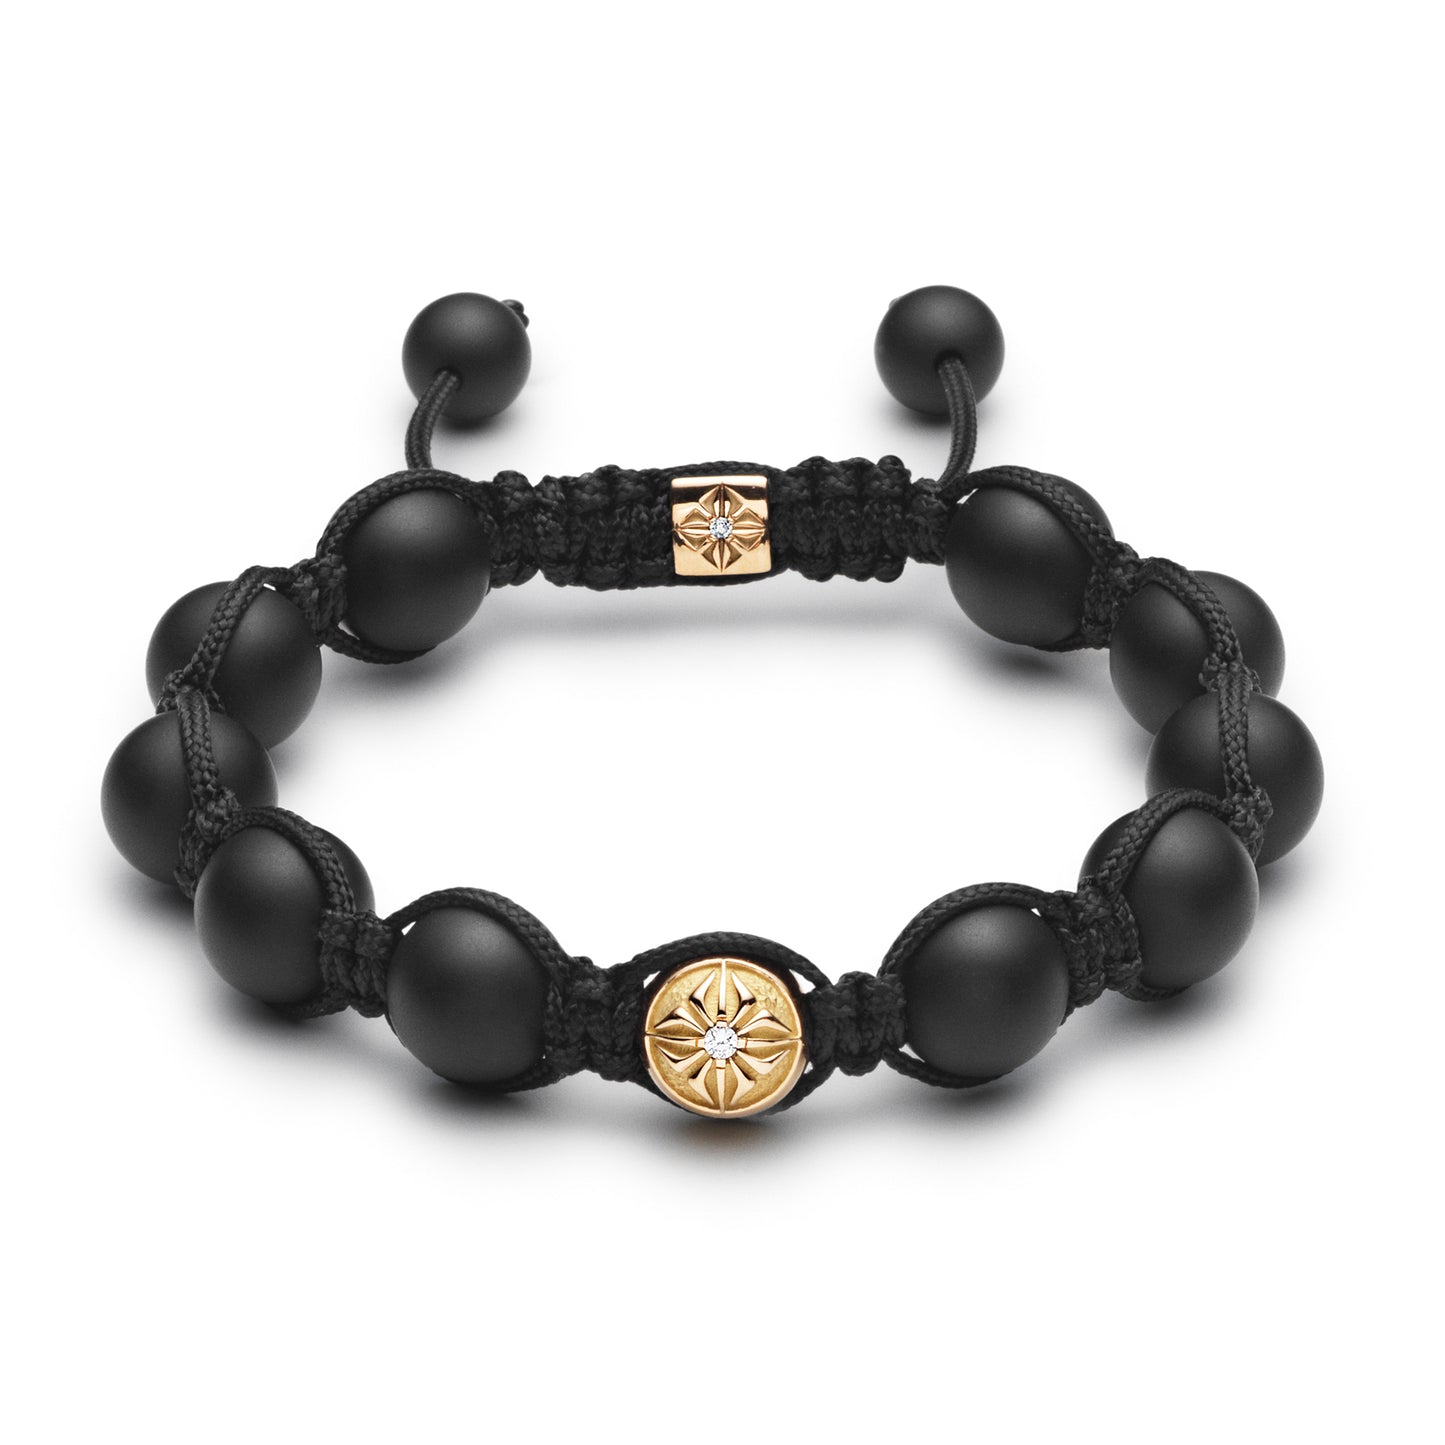 The iconic SHAMBALLA® Braided Bracelet with 10mm beads and macramé braiding